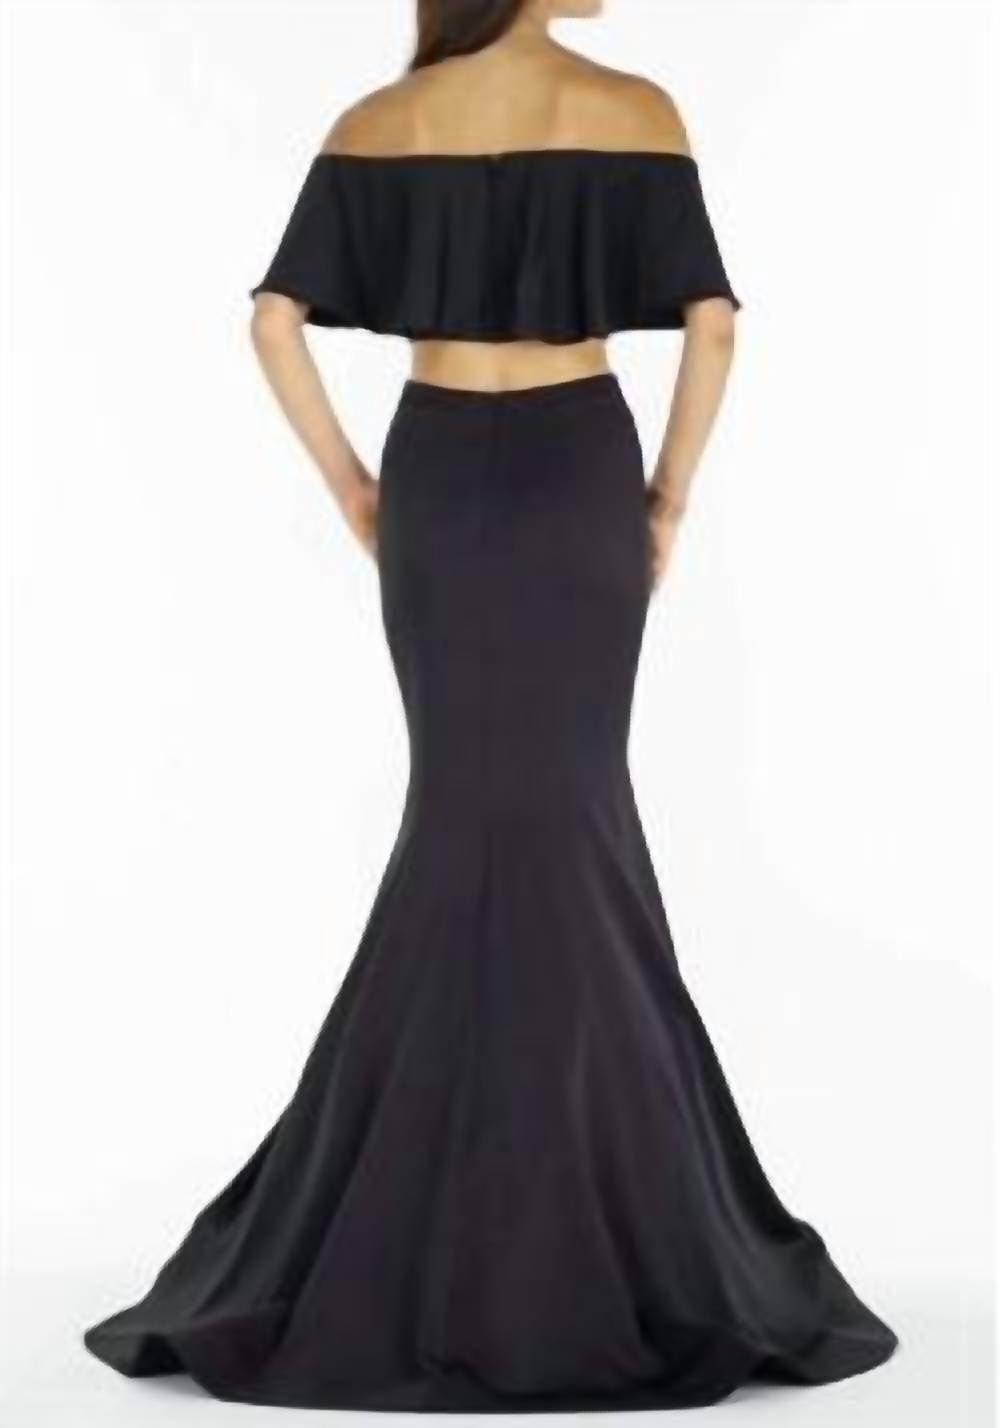 Style 1-3140928264-2168 ALYCE PARIS Size 8 Black Mermaid Dress on Queenly